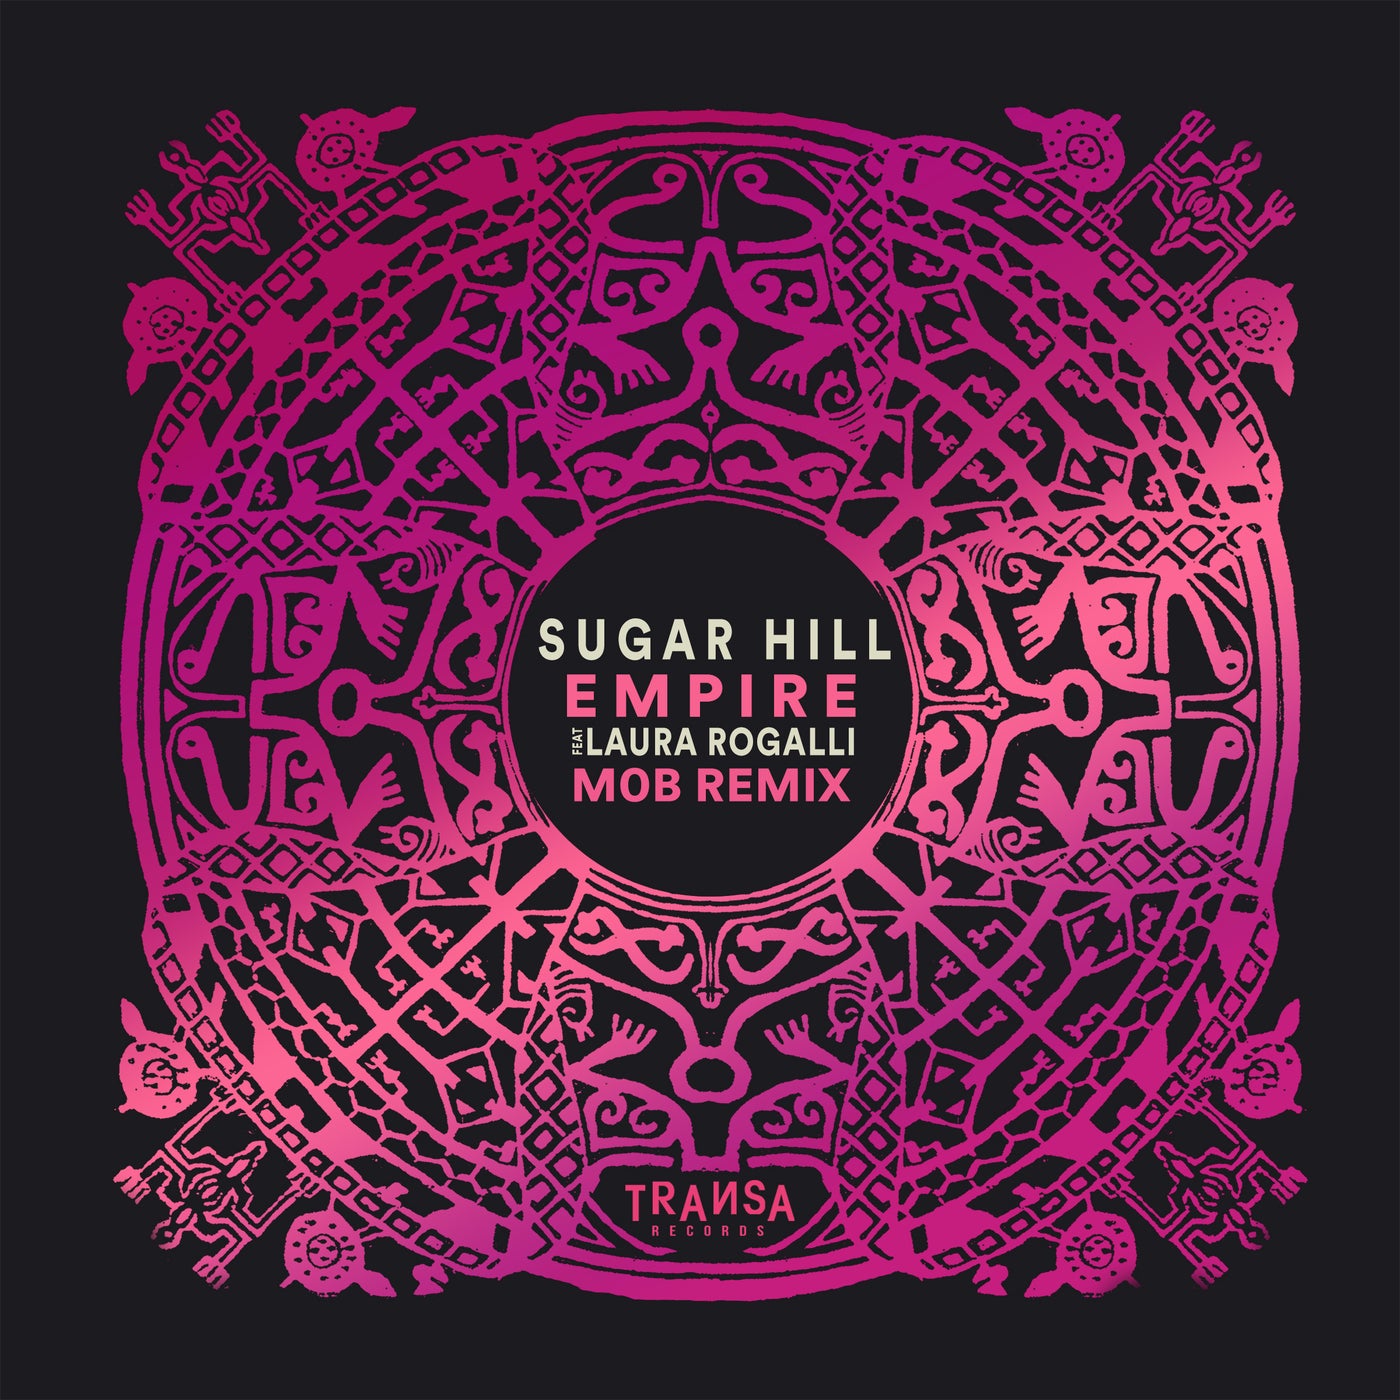 Sugar Hill music download - Beatport